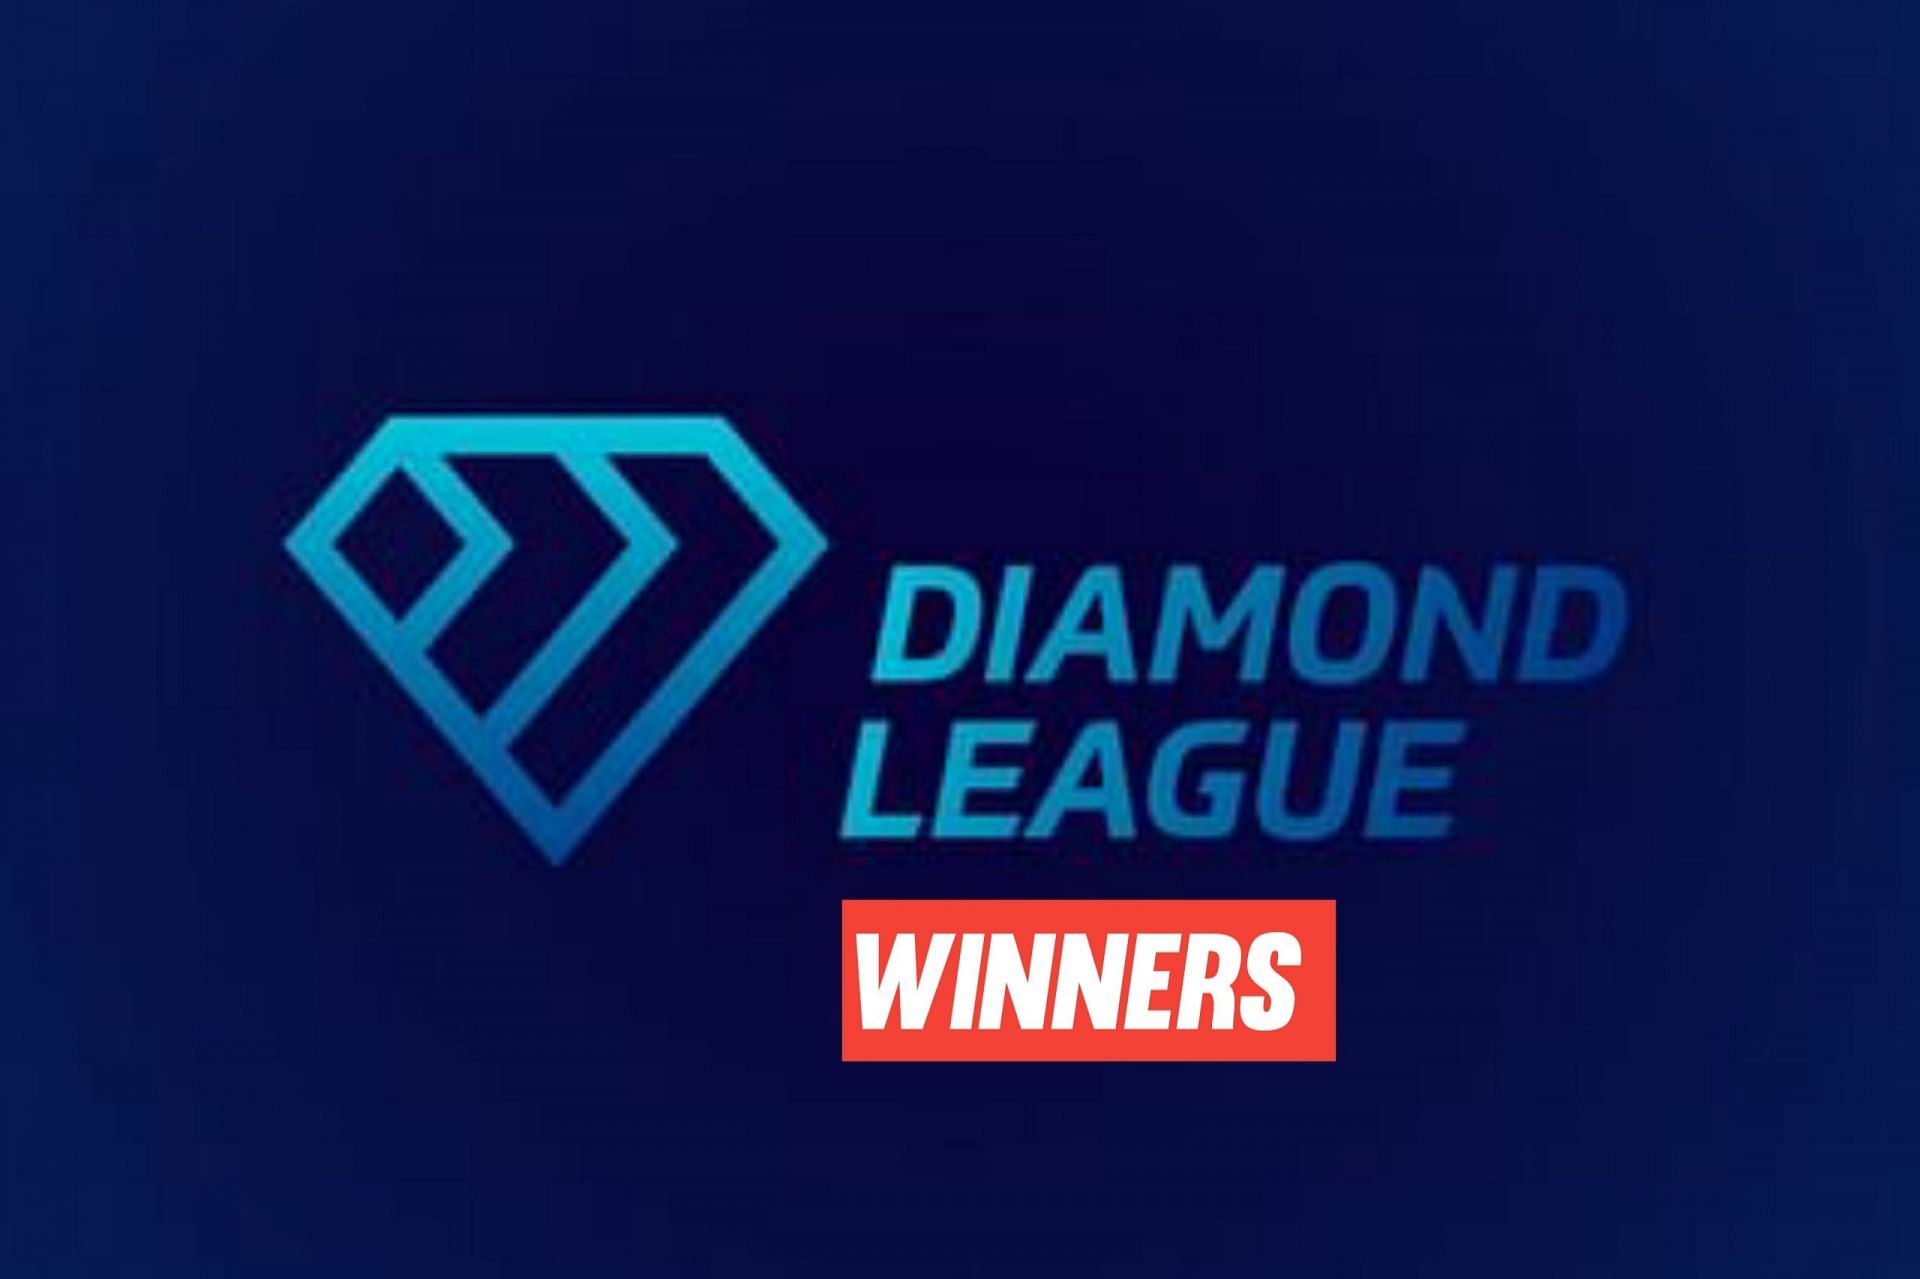 List of winners of the Diamond League 2022 